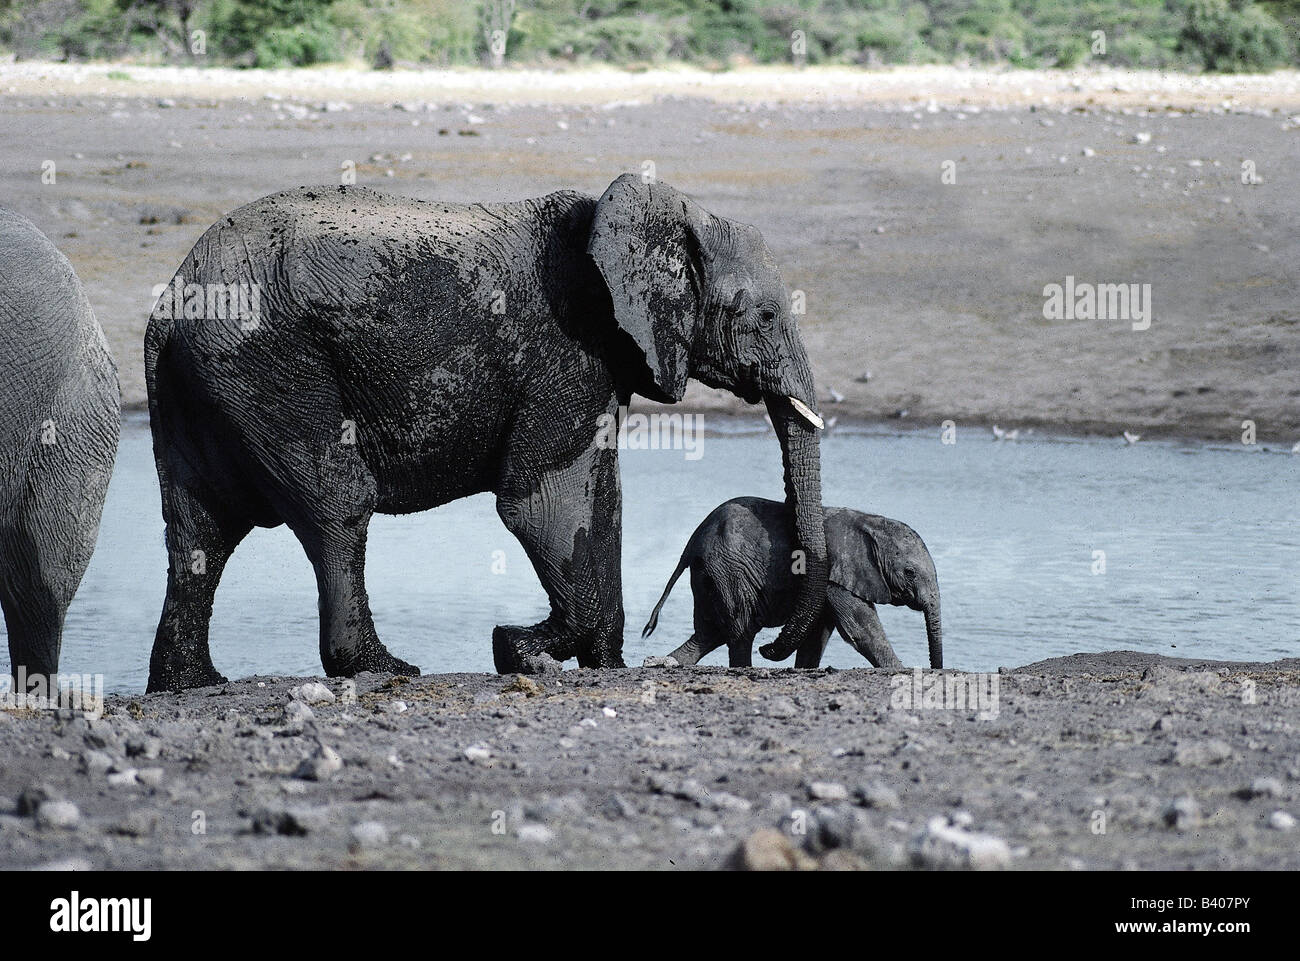 Zoologia / animali, mammifero / di mammifero, Elephantidae, Bush africano Elefante africano (Loxodonta africana), mucca elefante con cub dopo il fango Foto Stock